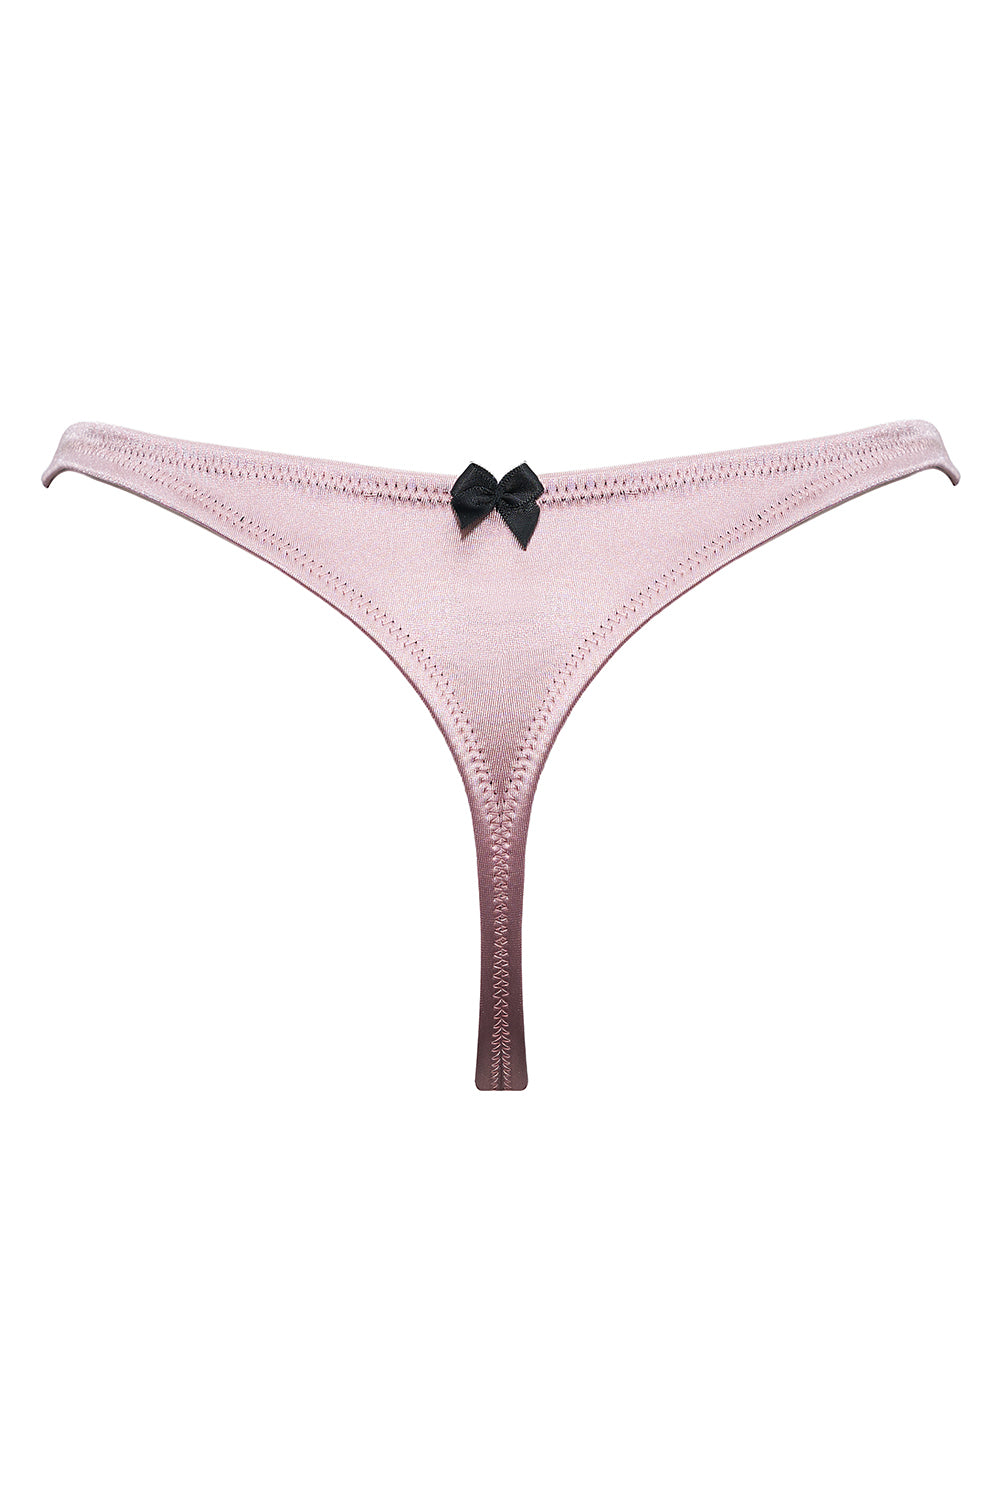 Lupessa pink thongs